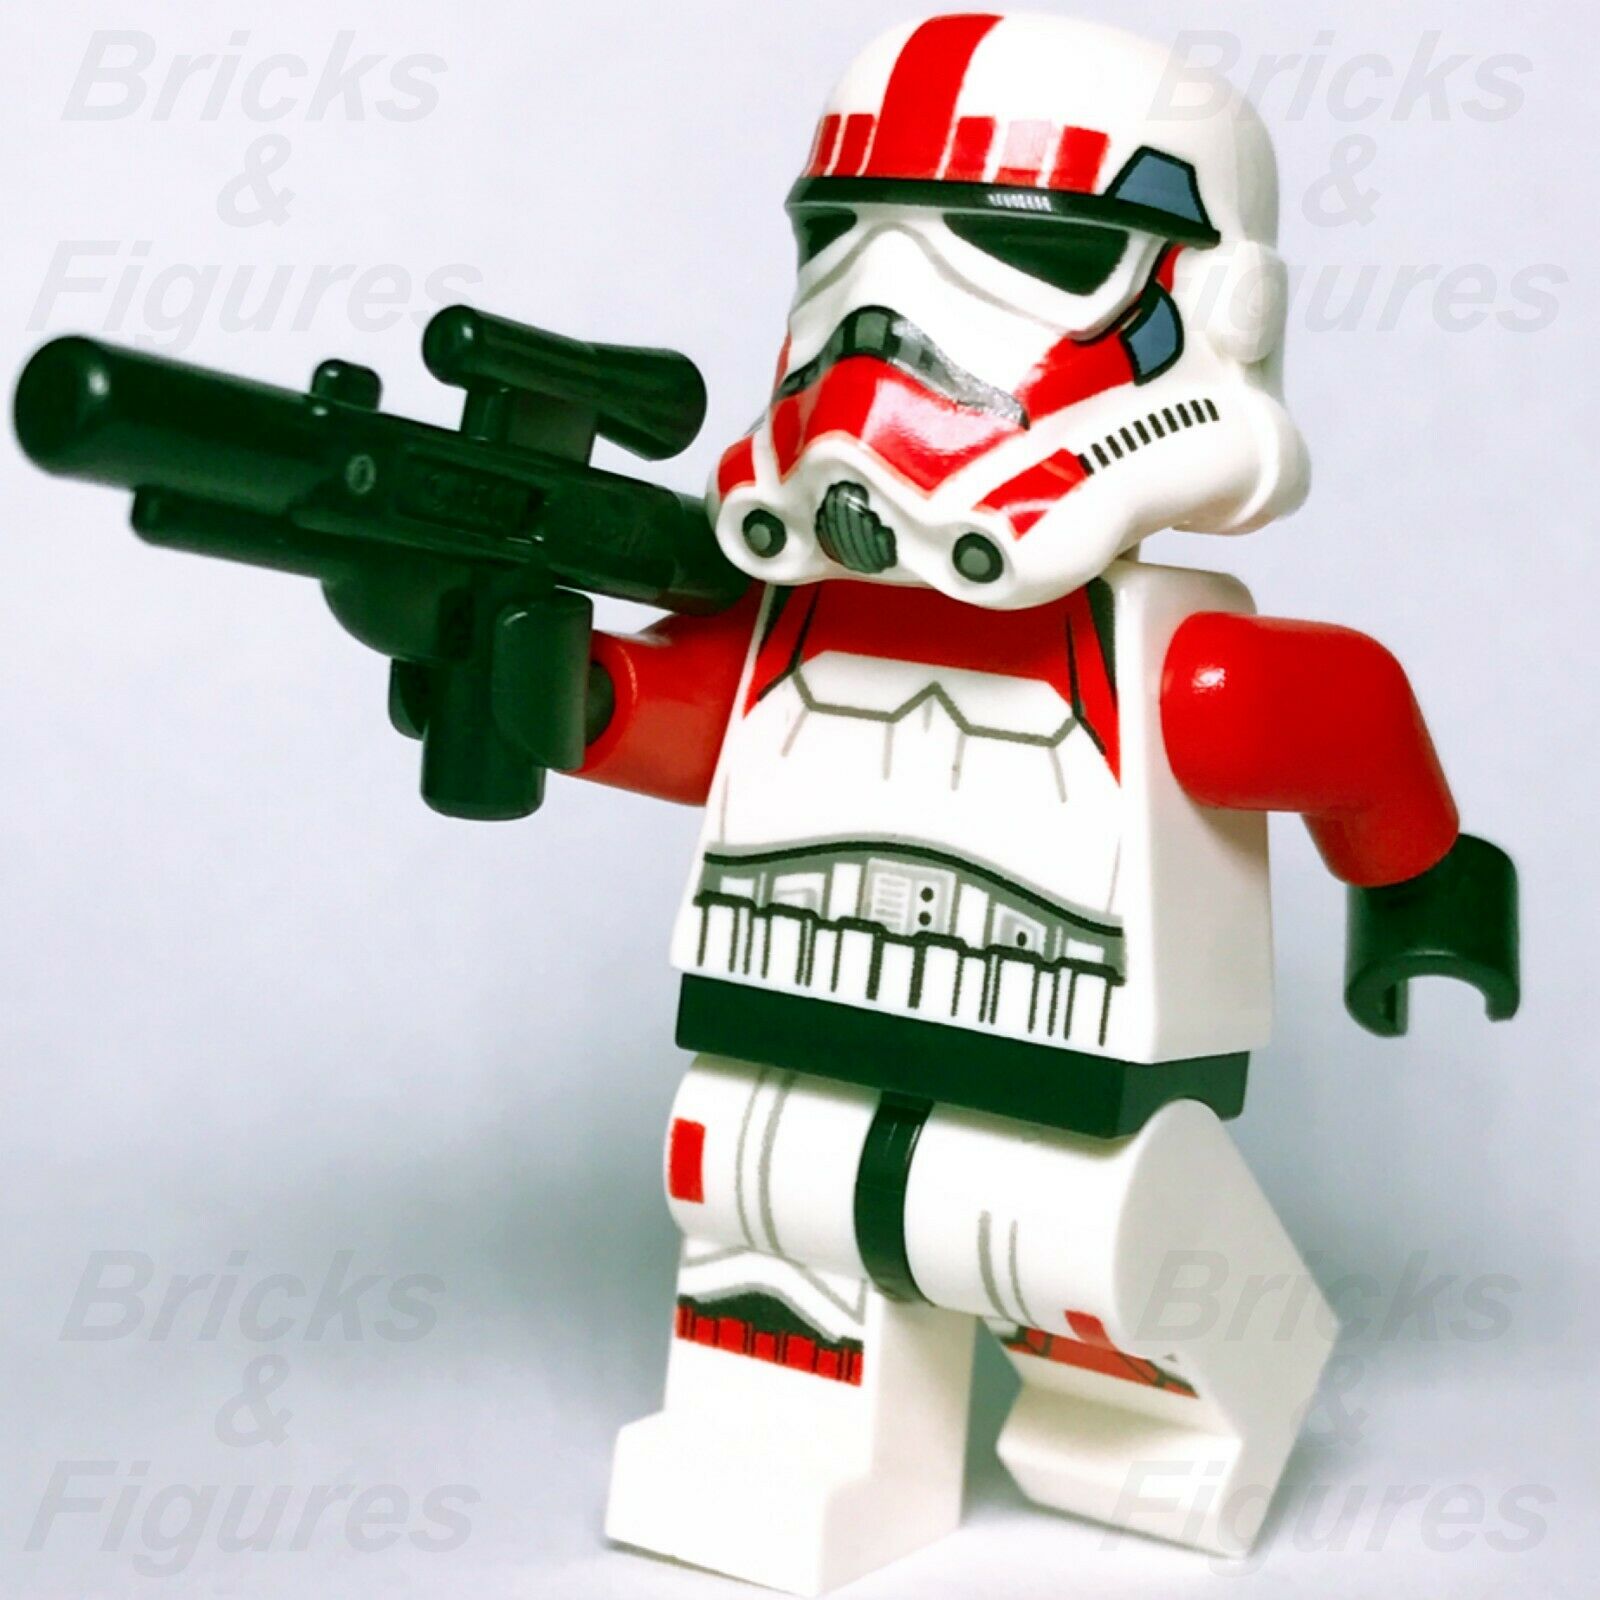 New Star Wars LEGO Imperial Shock Trooper Battlefront Minifigure 75134 - Bricks & Figures